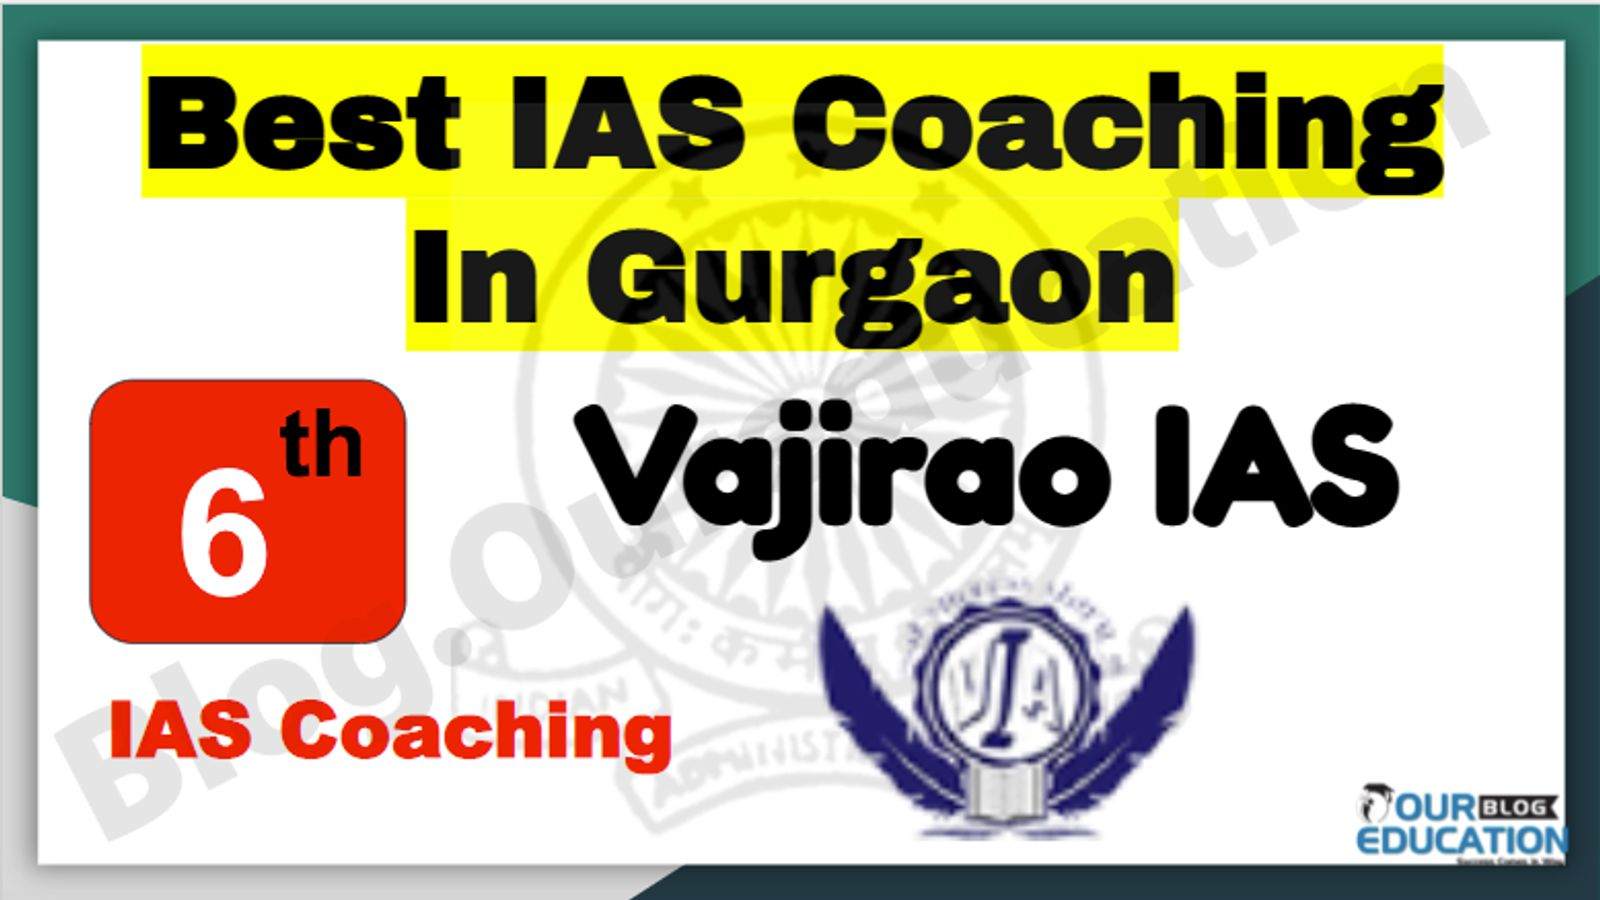 6th Best IAS Coaching in Gurgaon